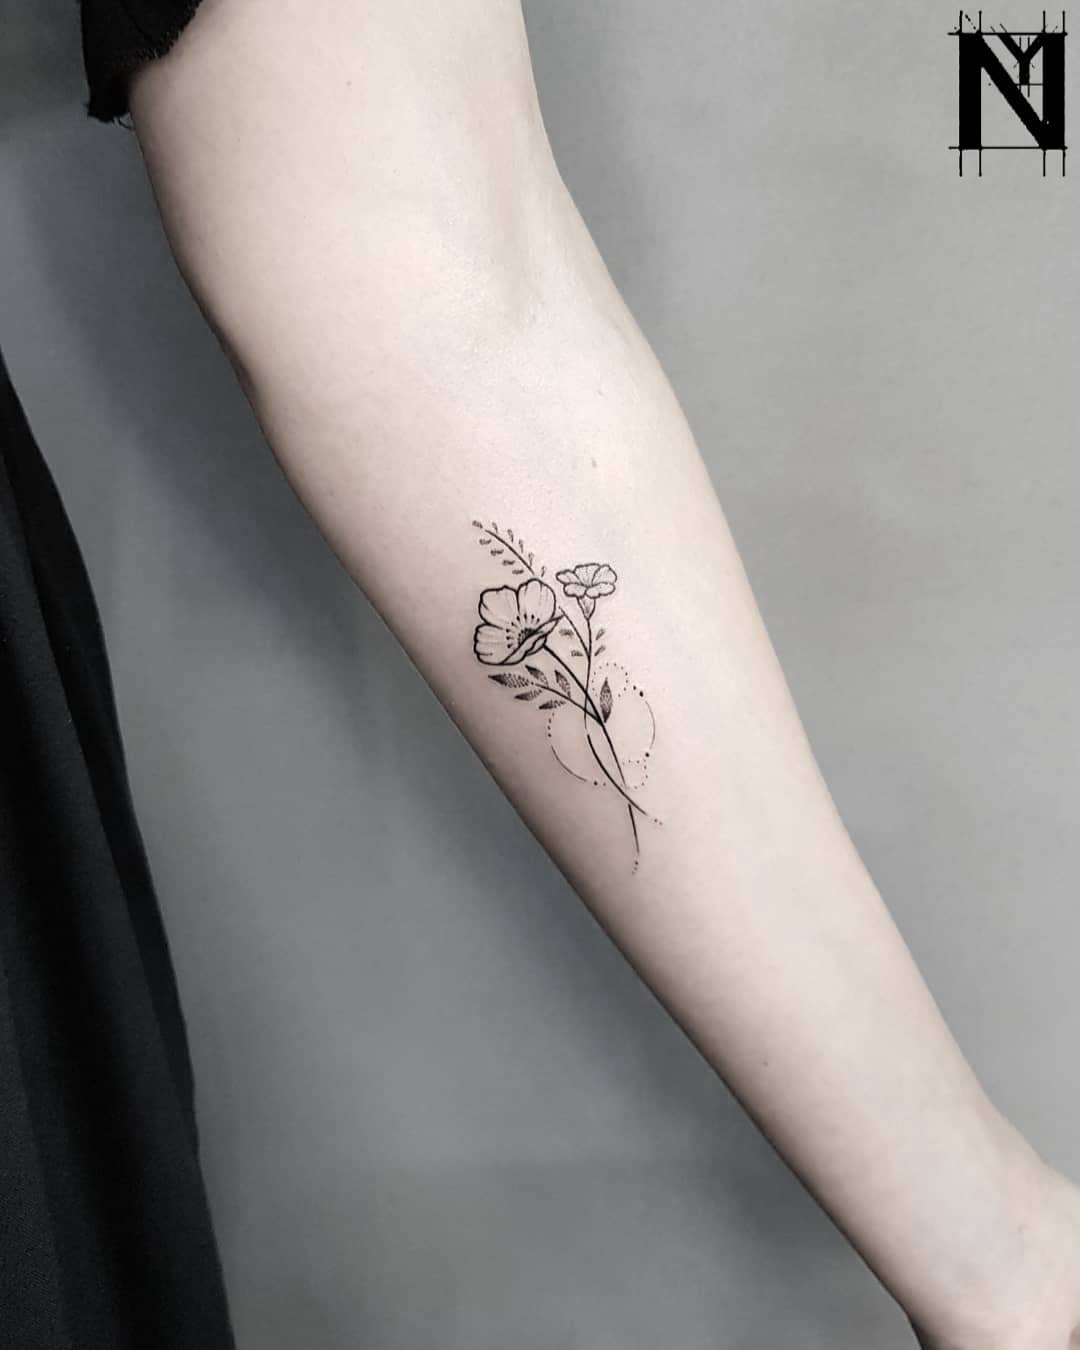 Minimalist floral bundle tattoo by Noam Yona